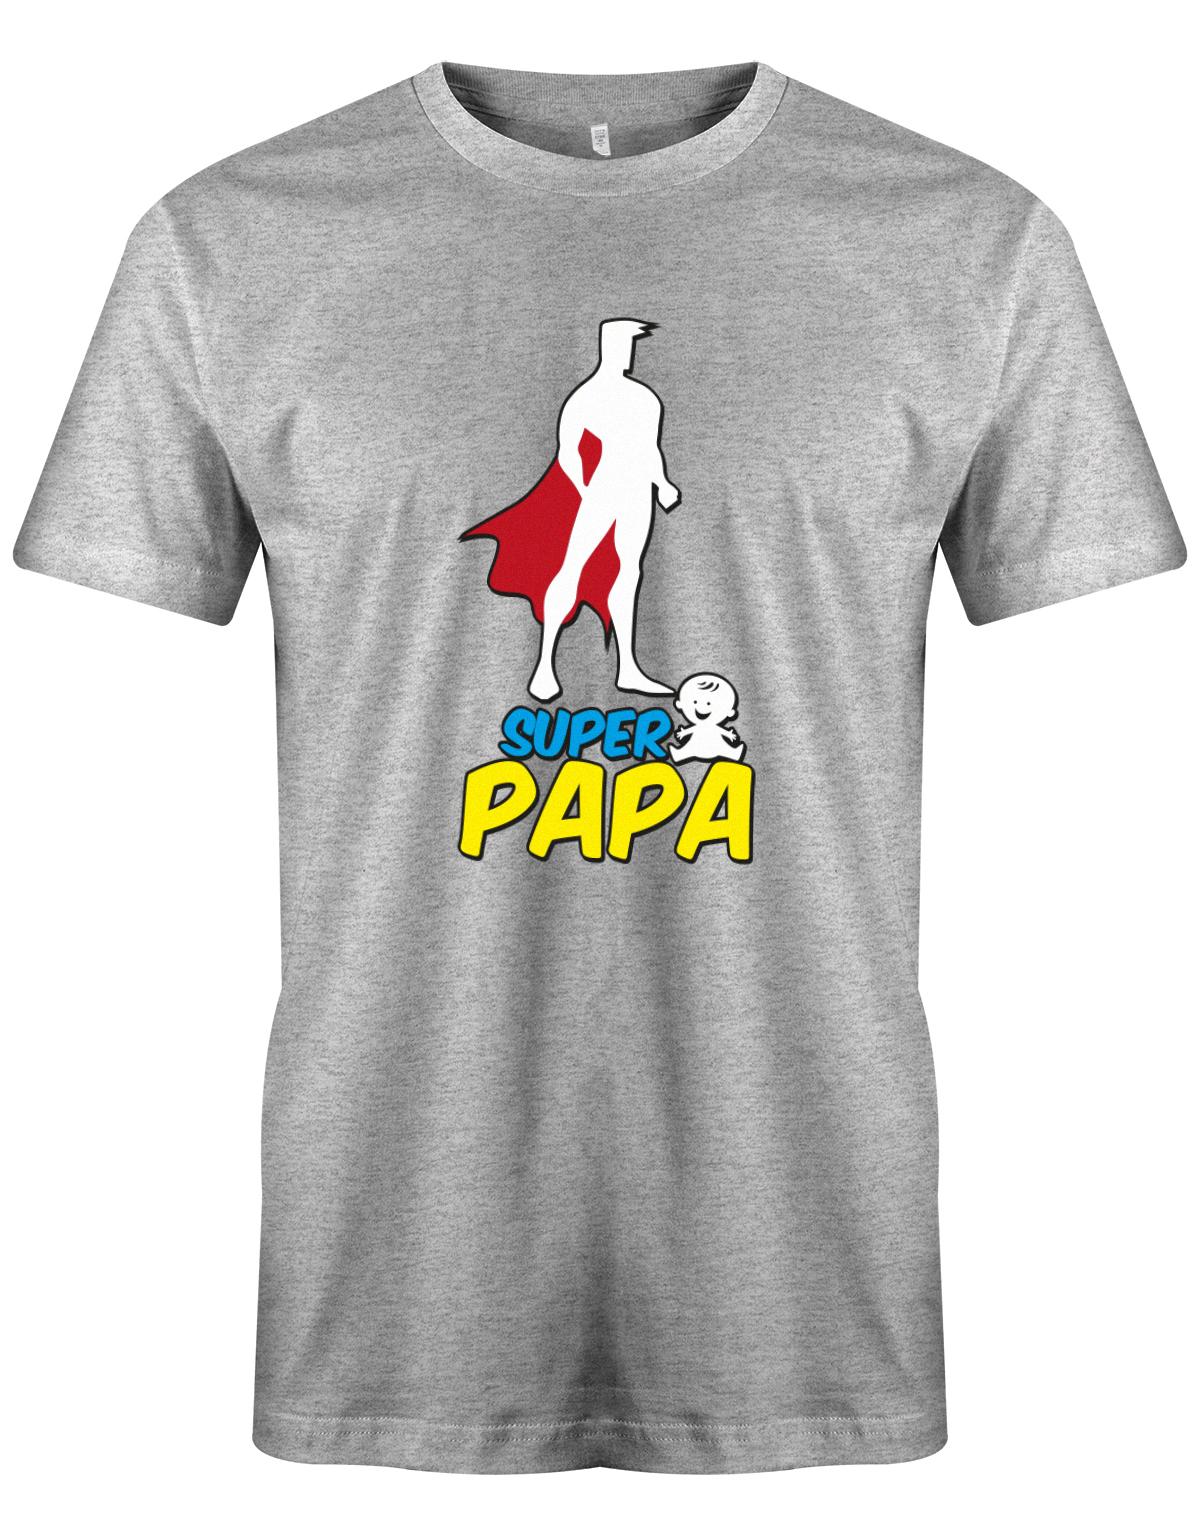 Super-Papa-Herren-Shirt-Grau